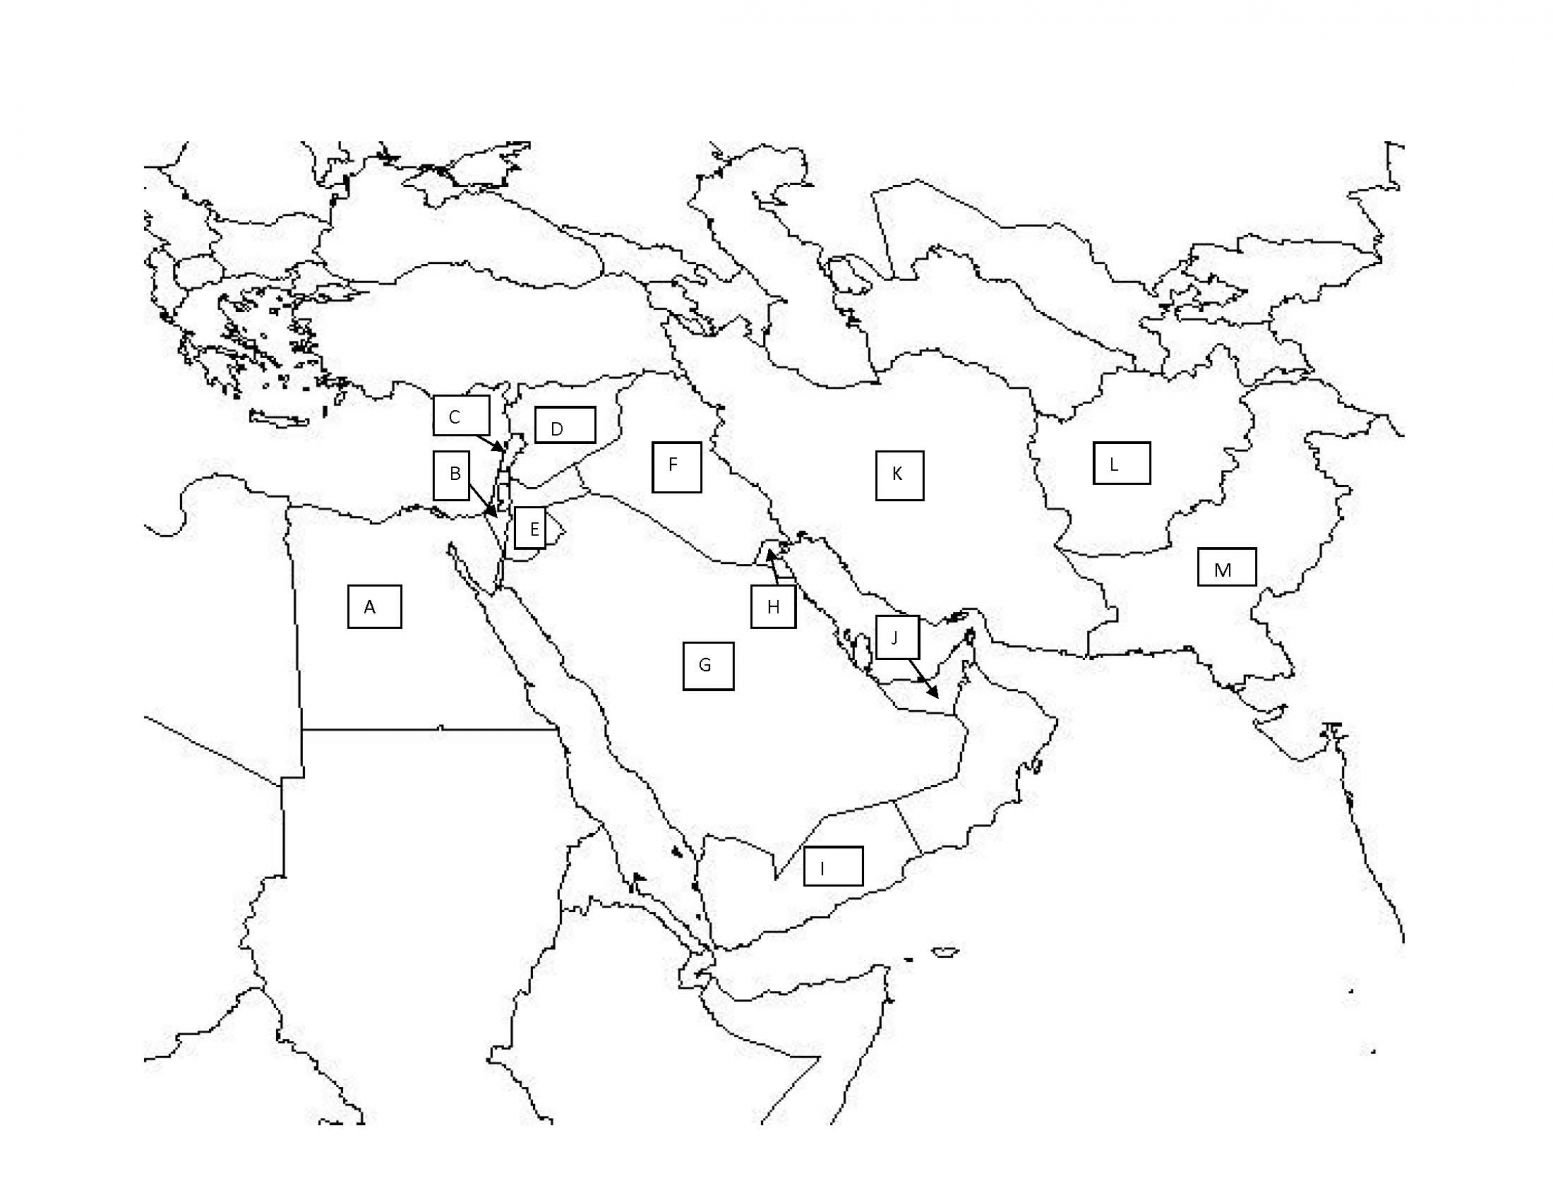 Middle East Practice Test - Quiz